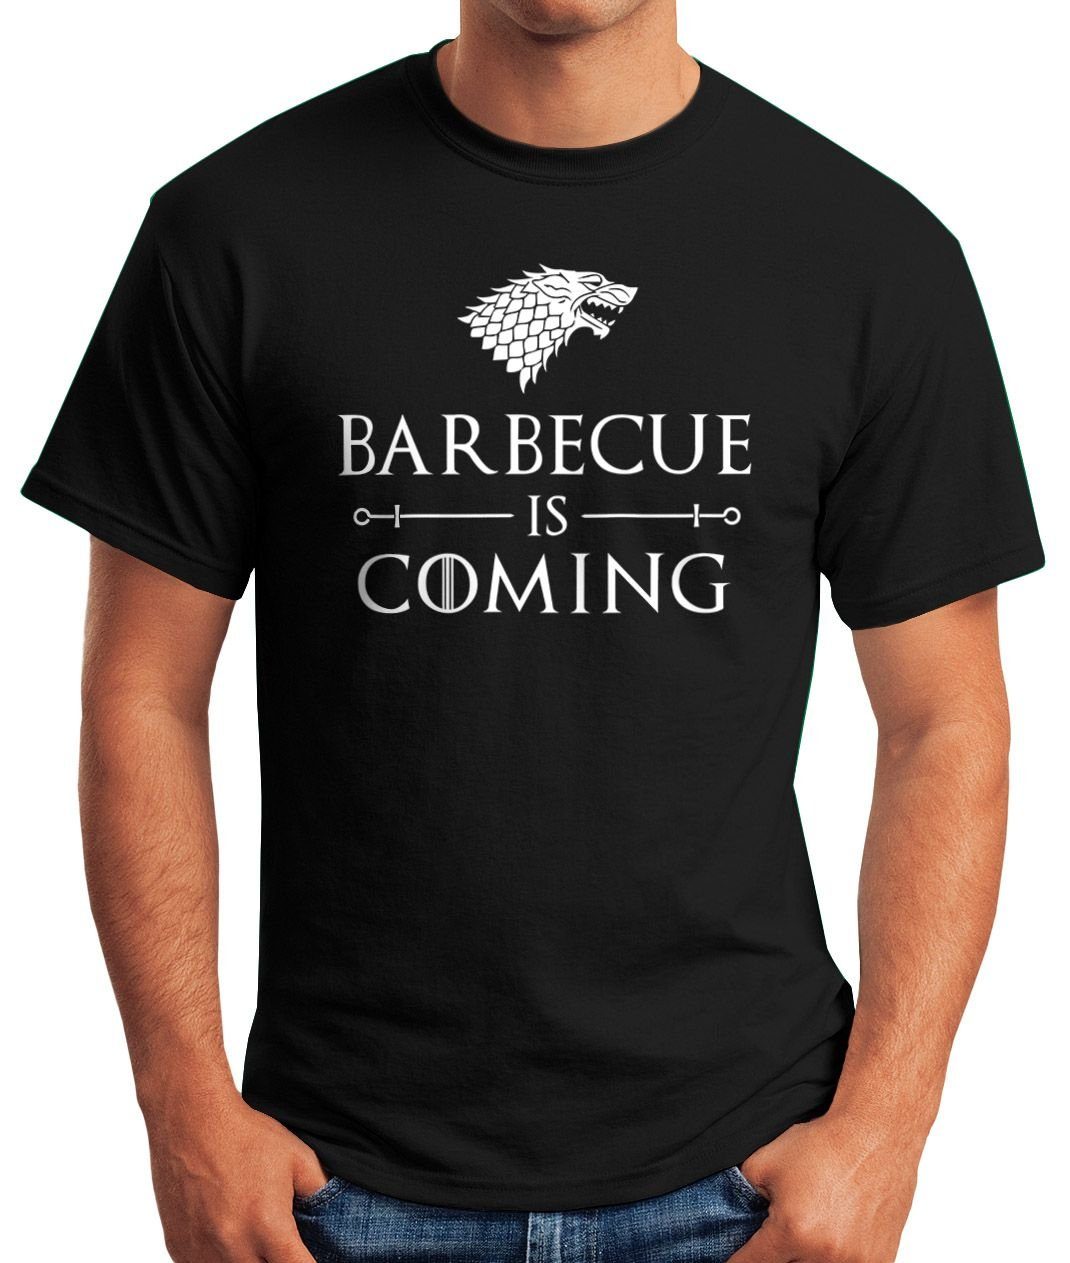 MoonWorks Print-Shirt Is T-Shirt Grillen Herren Moonworks® Barbecue Spruch mit Coming Print lustig Fun-Shirt